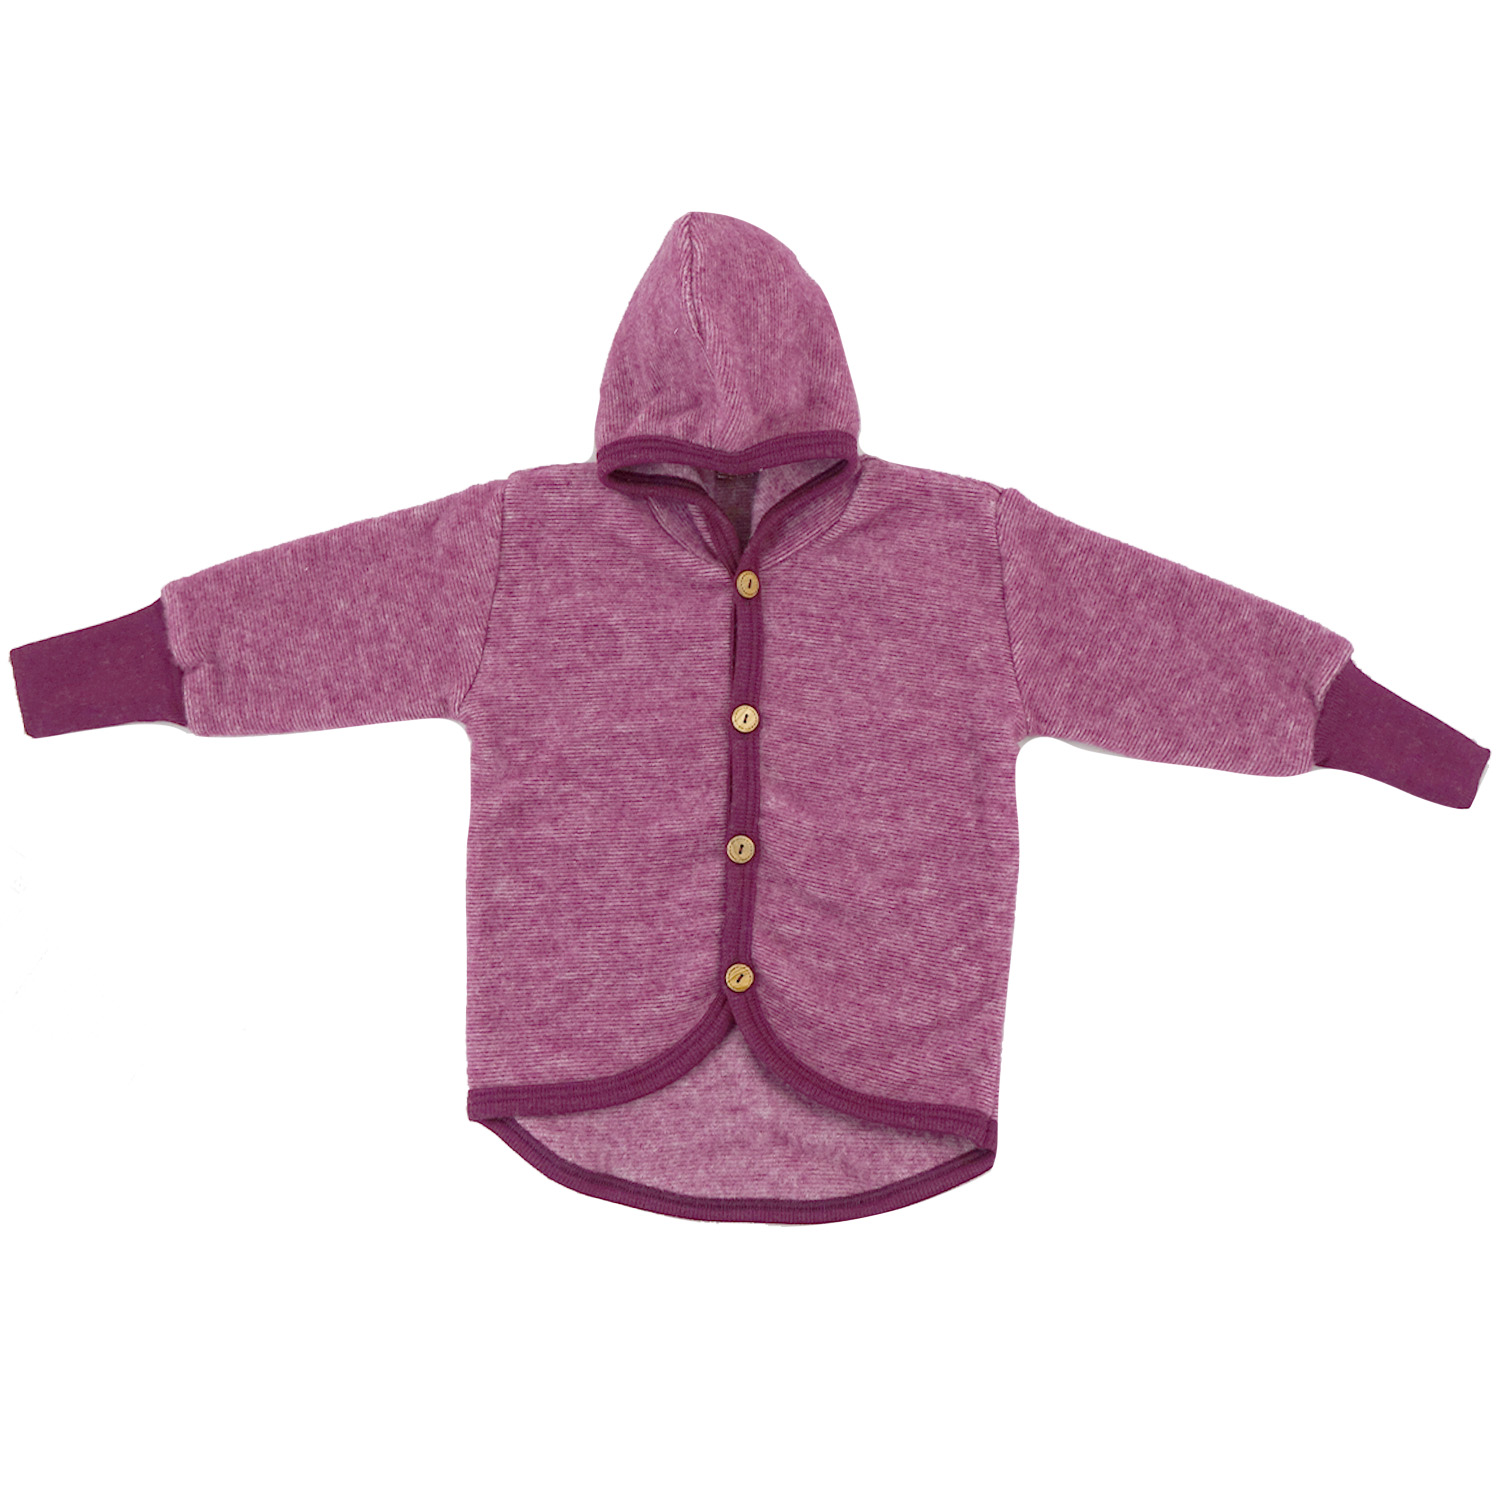 Cosilana Baby-Jacke mit Kapuze aus Woll-/Baumwollfleece